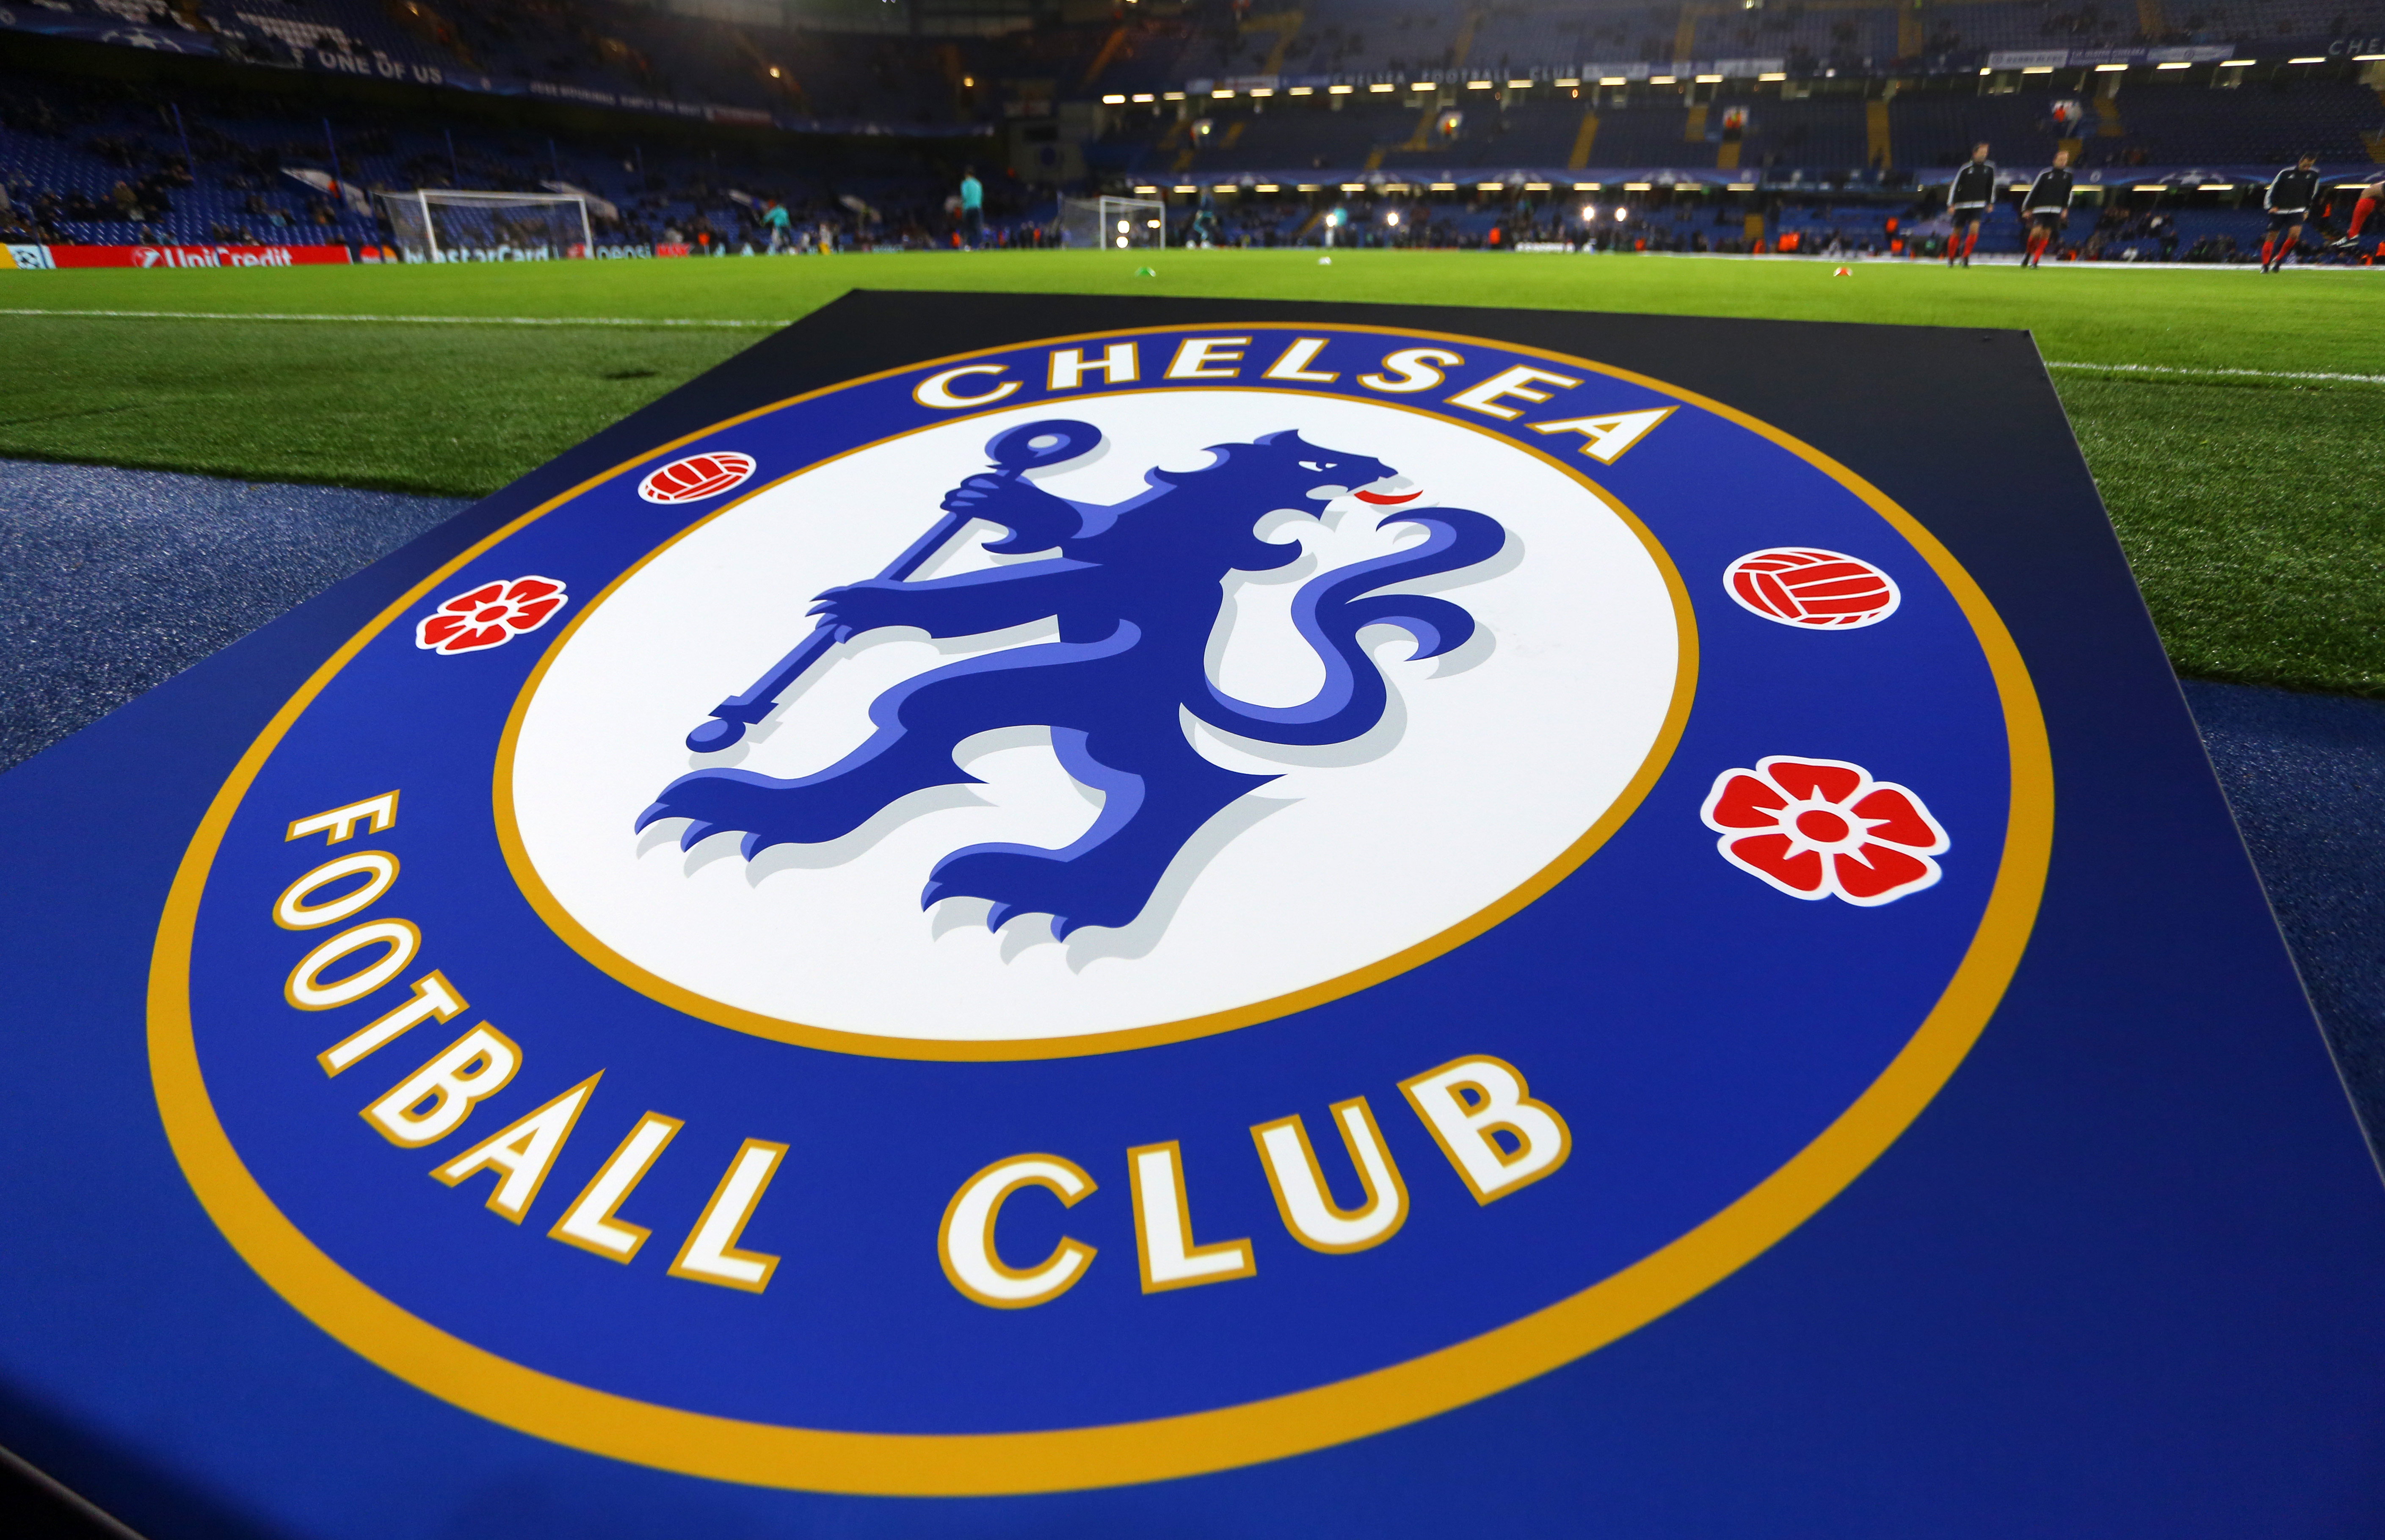 Chelsea FC Tactics and Transfers: Part 1